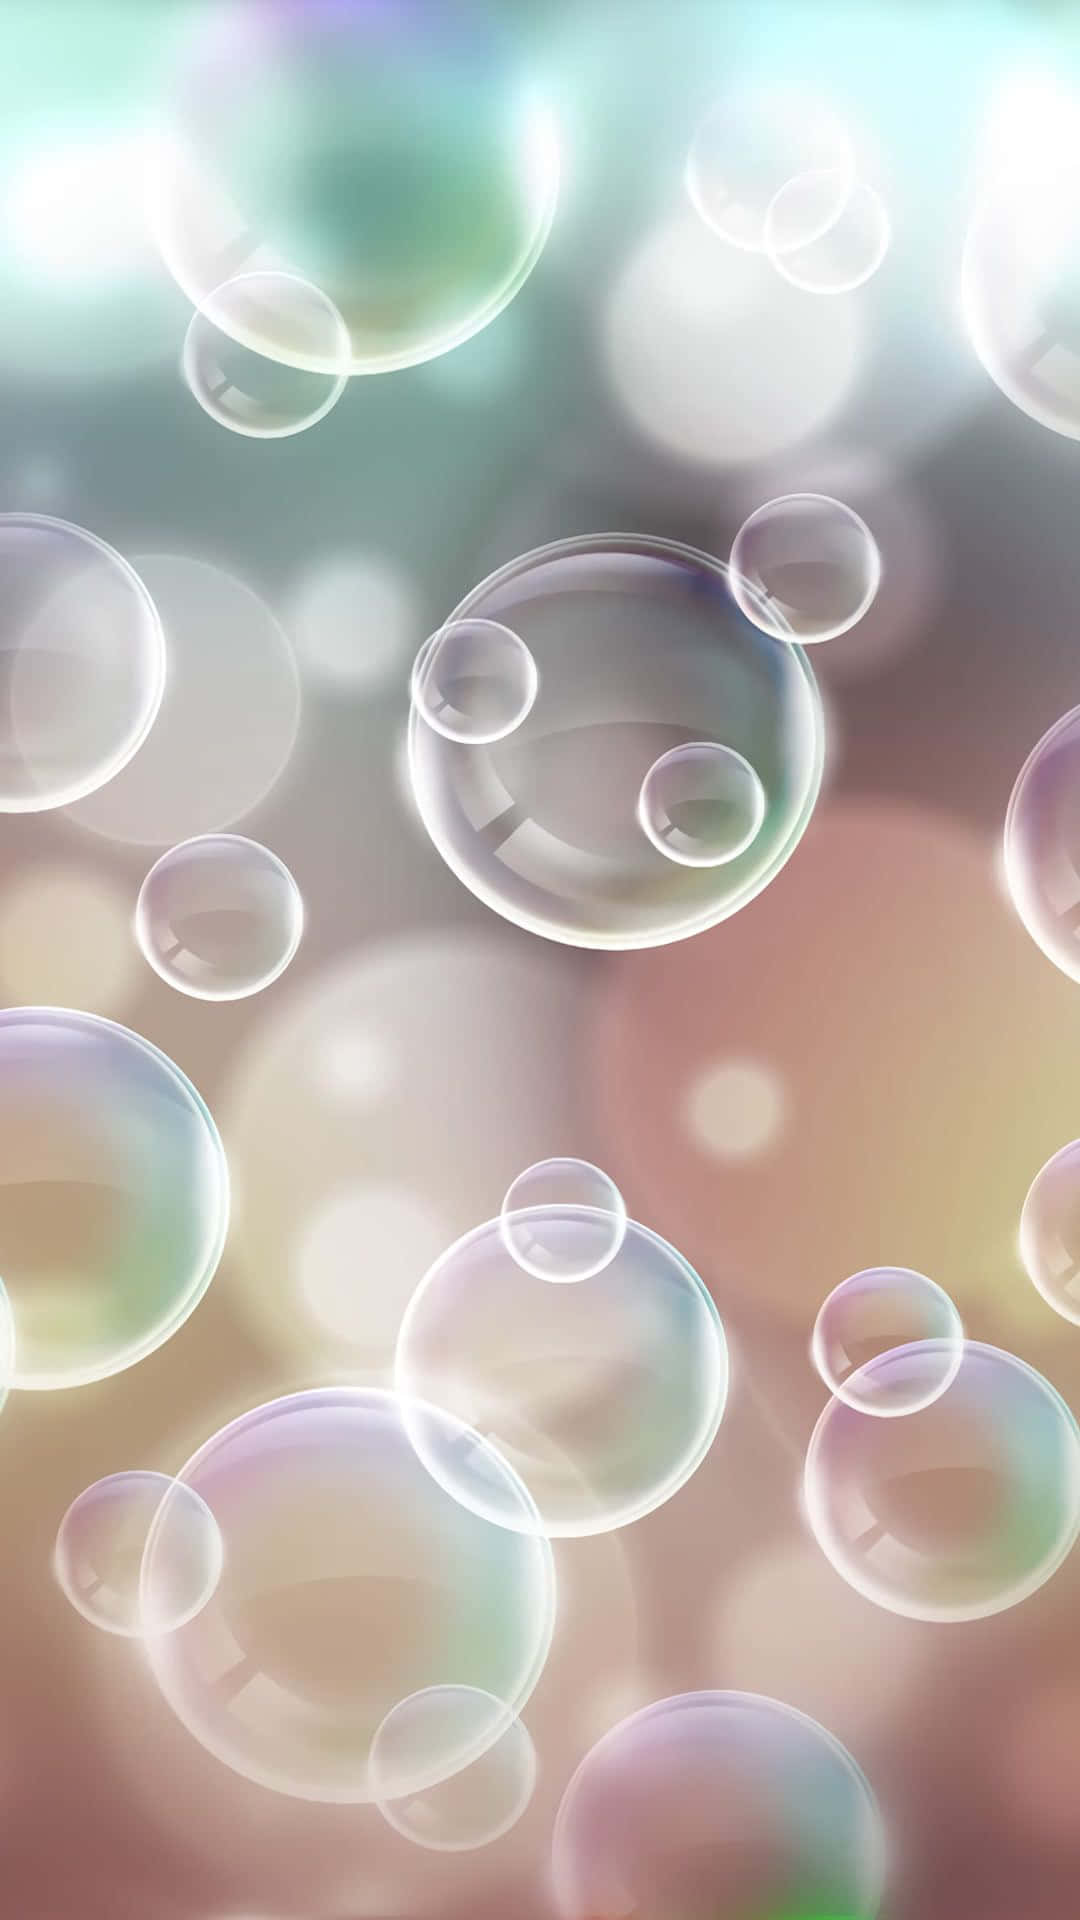 Bubble Wallpaper Images  Free Download on Freepik